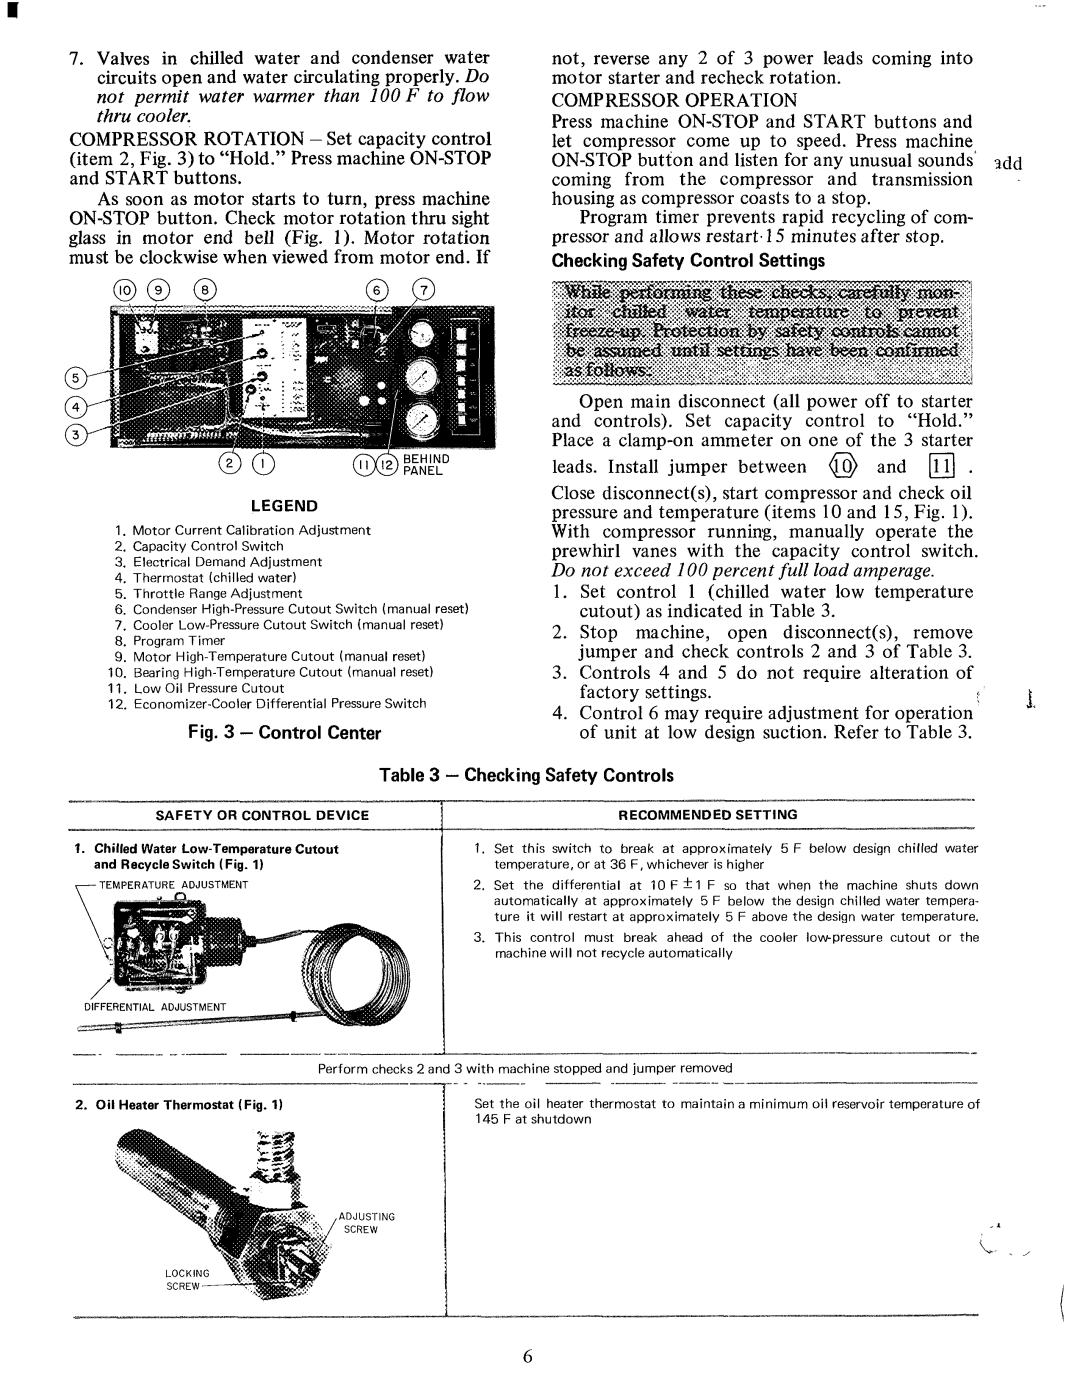 Carrier 19EA manual 